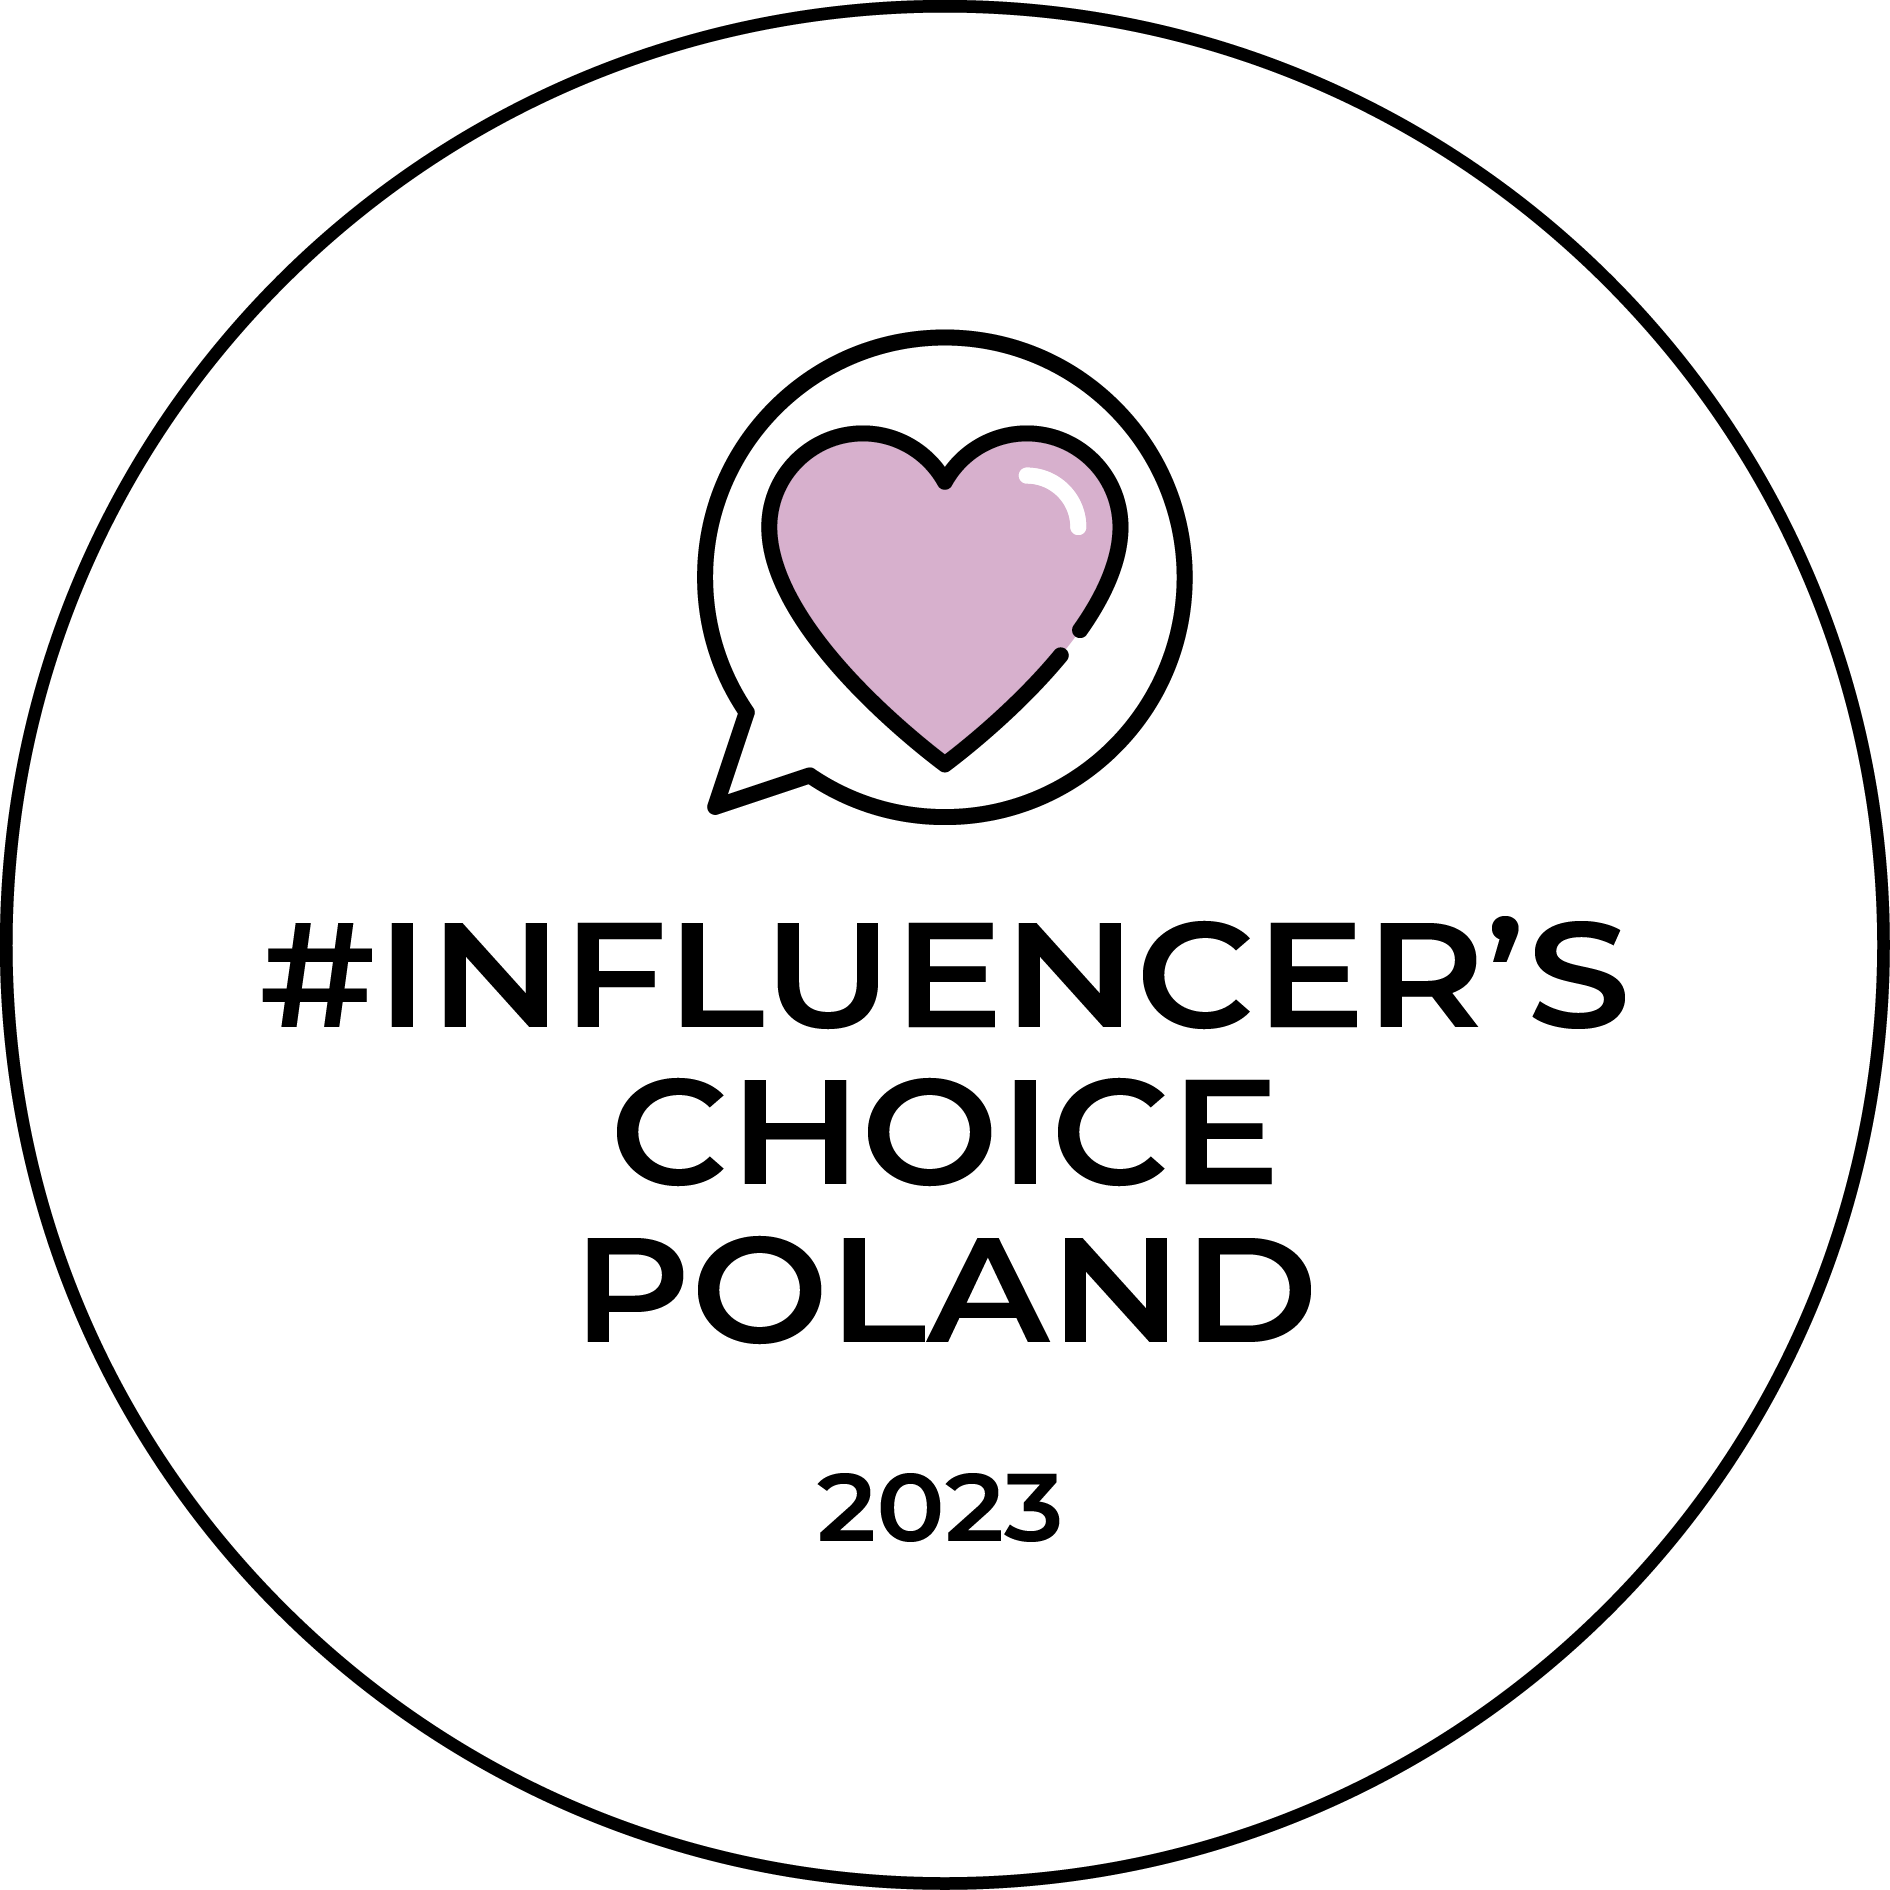 Influencer’s Choice Poland 2023